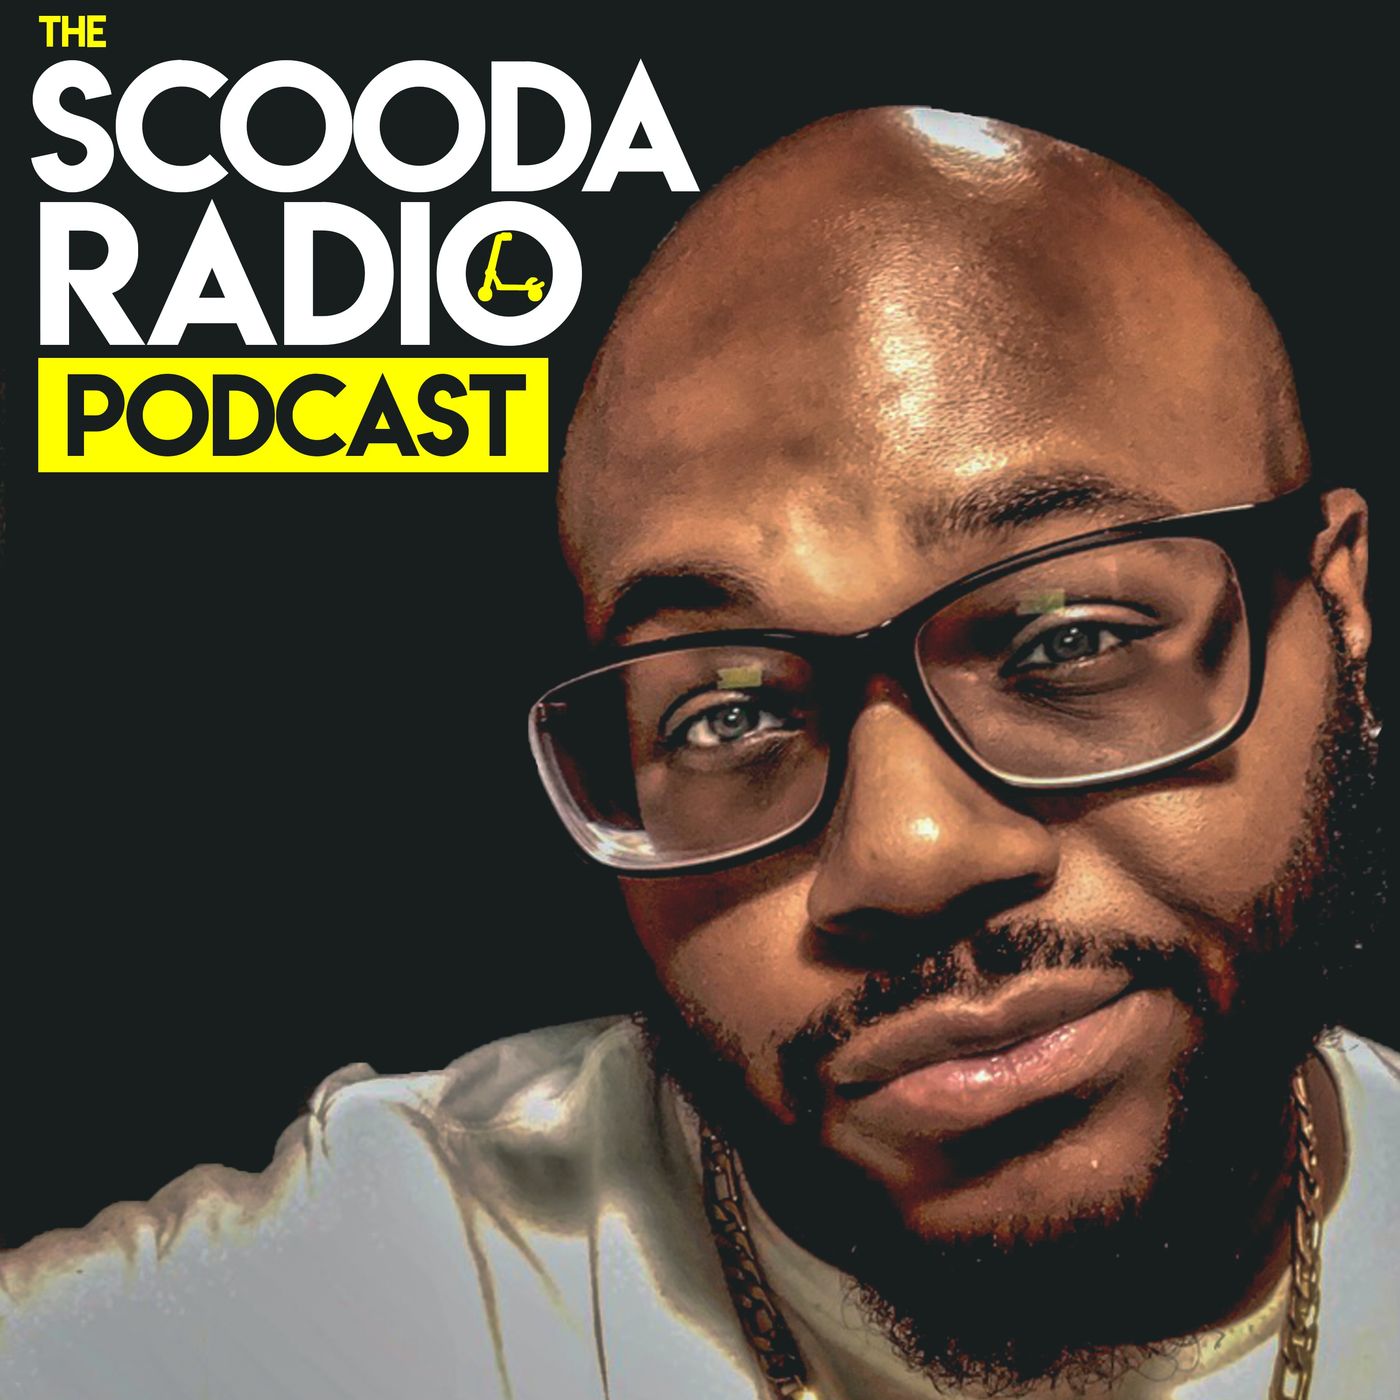 The Scooda Radio Podcast